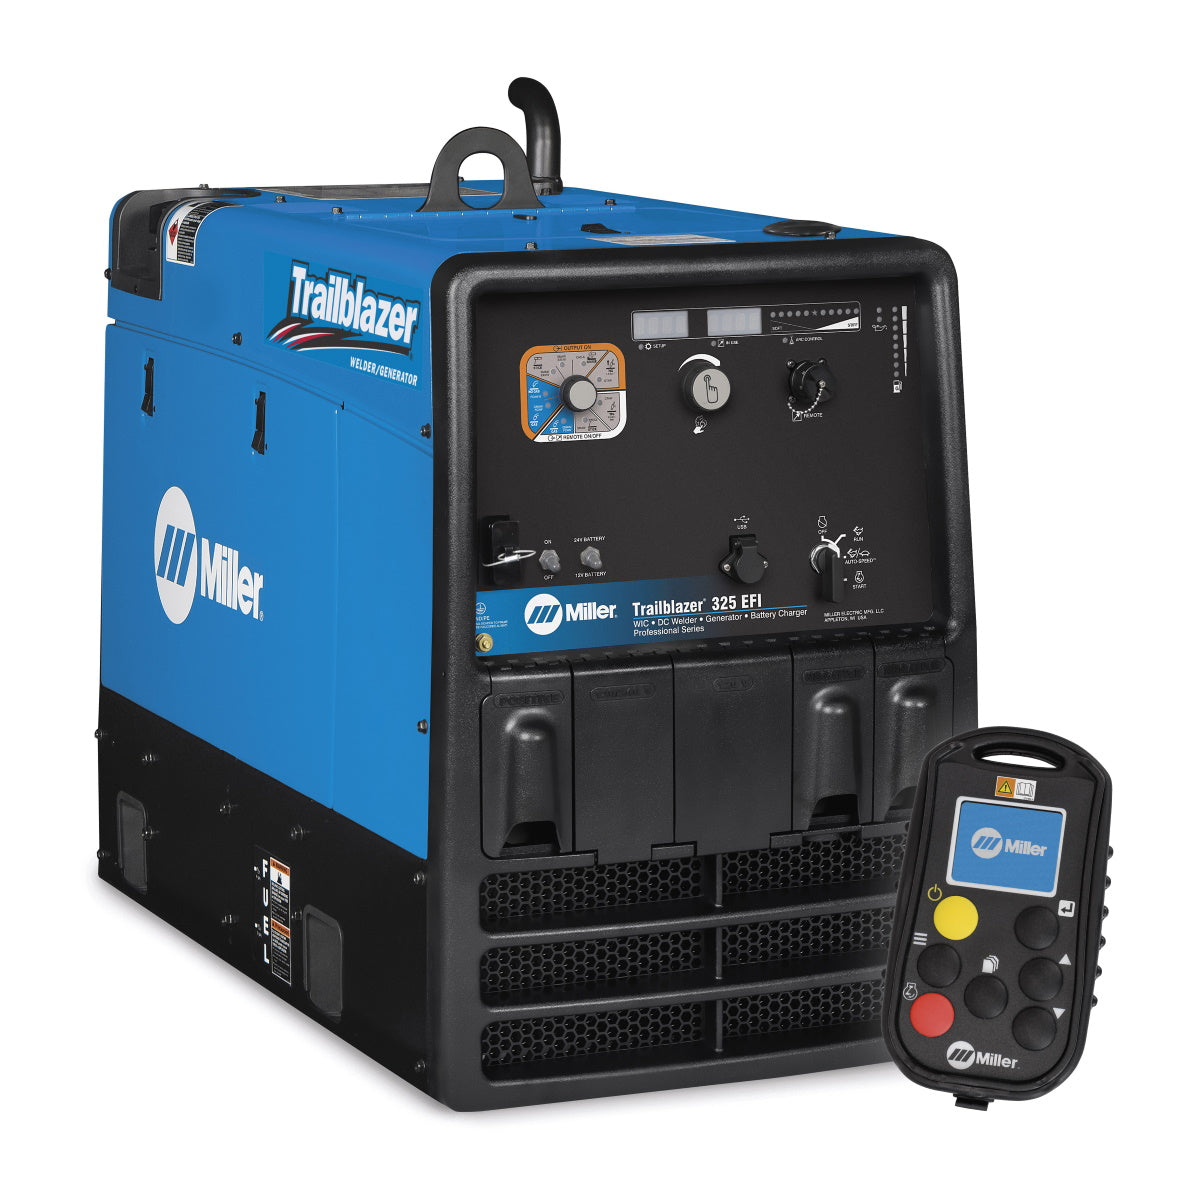 Miller Trailblazer 325 EFI Welder/Generator w/Excel Power, Battery Charge, WIC (907798005)